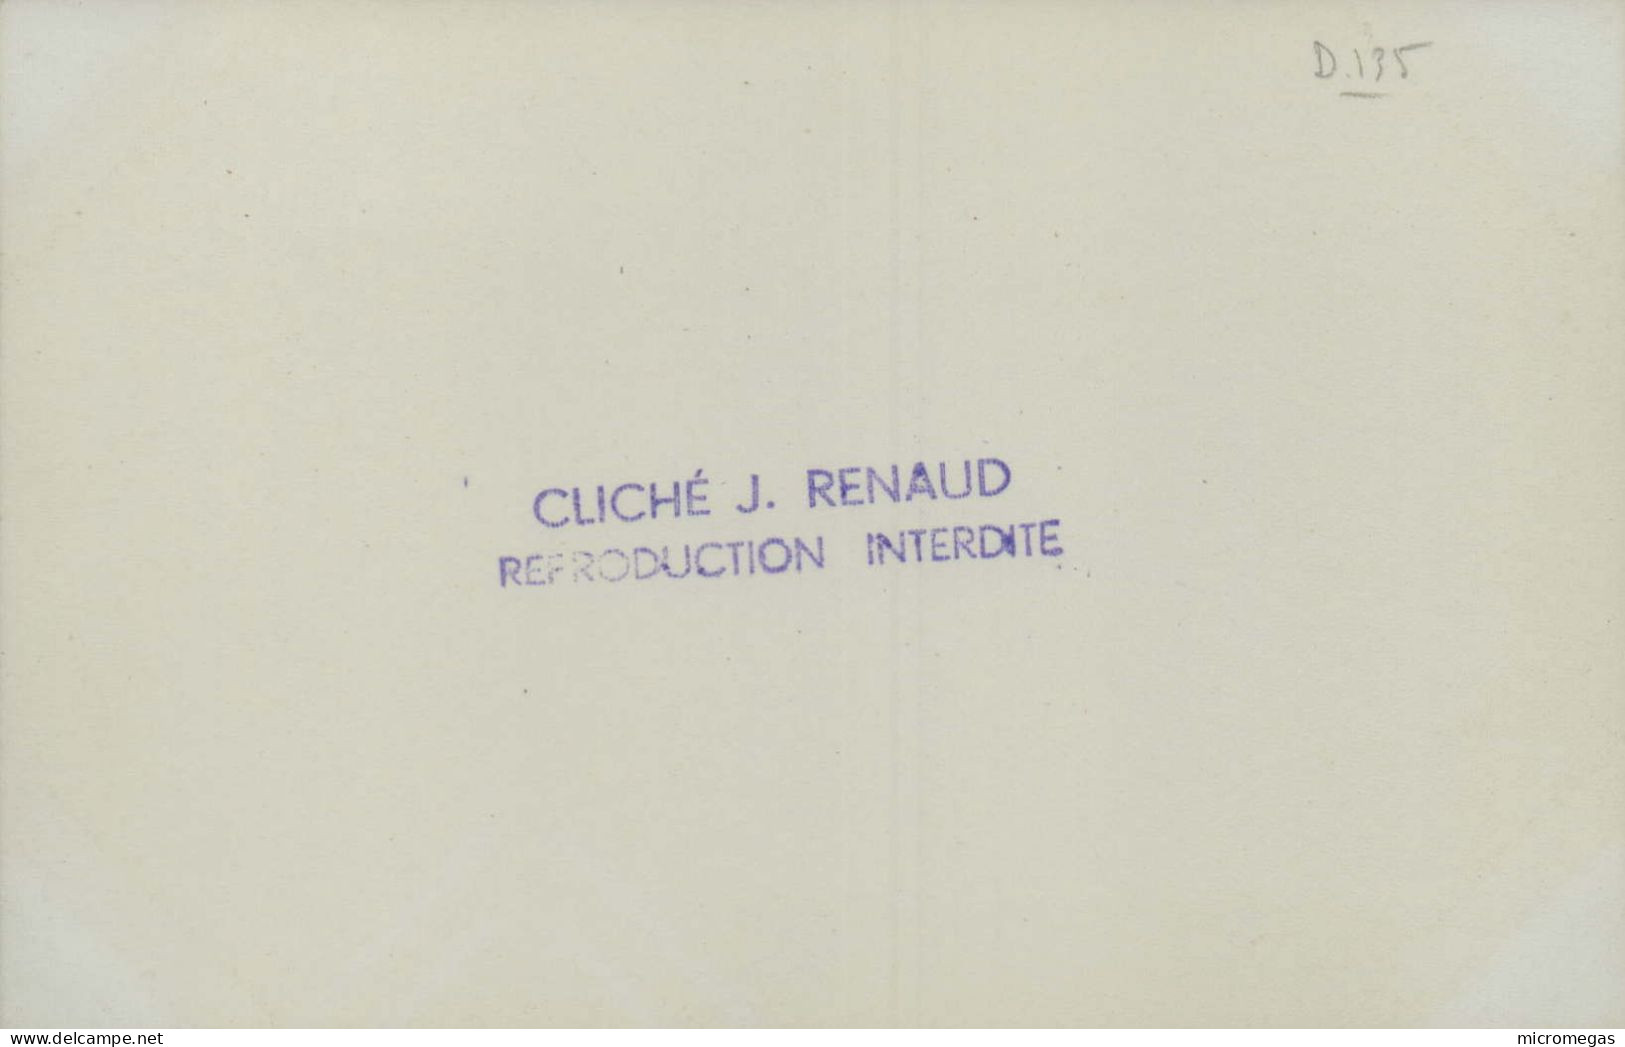 D-135 - Cliché J. Renaud - Trenes